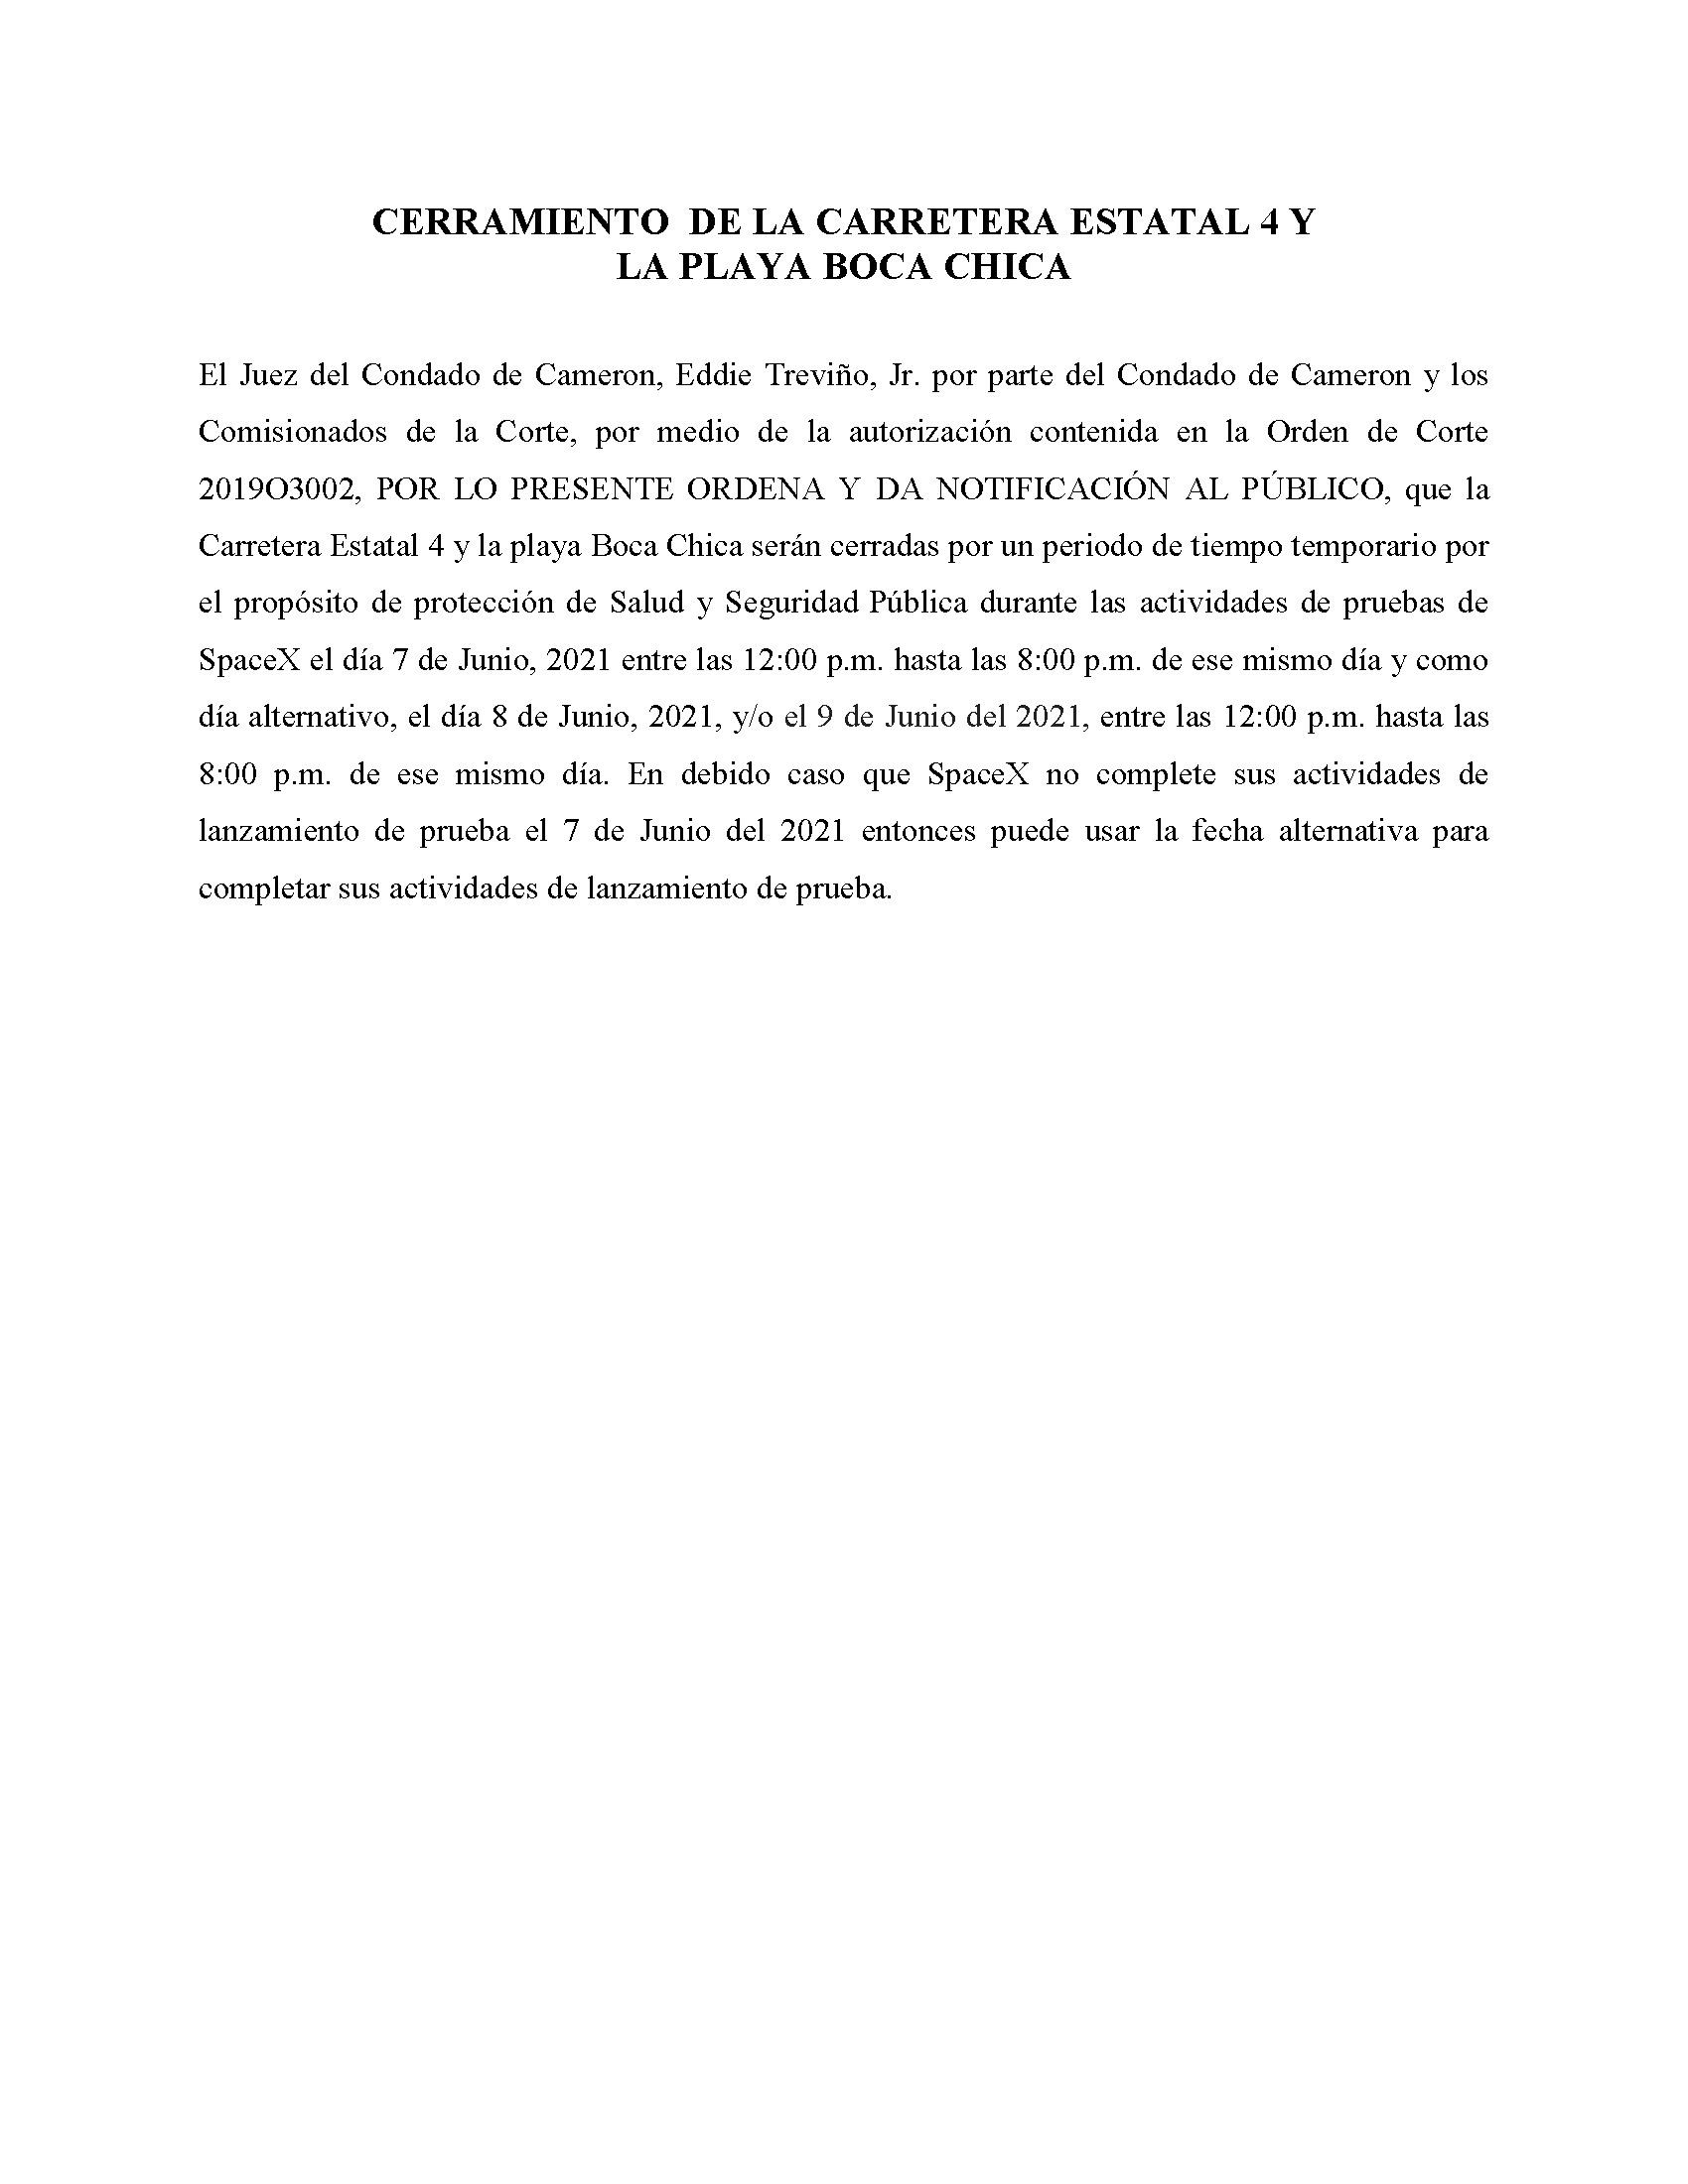 ORDER.CLOSURE OF HIGHWAY 4 Y LA PLAYA BOCA CHICA.SPANISH.06.07.2021